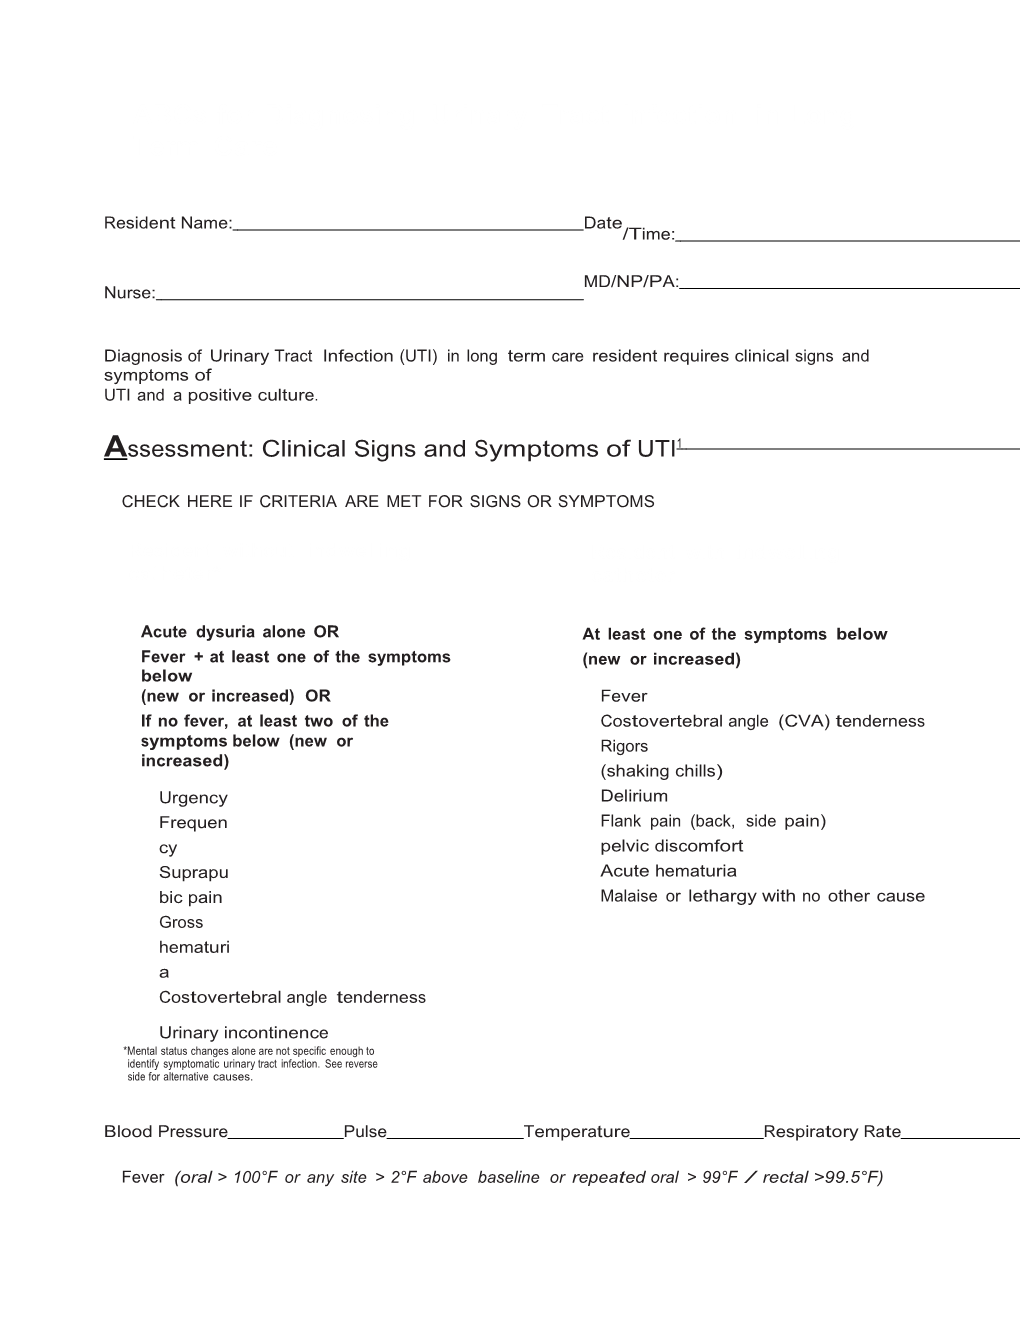 Abcsfordiagnosing Urinarytractinfection Inlongtermcare